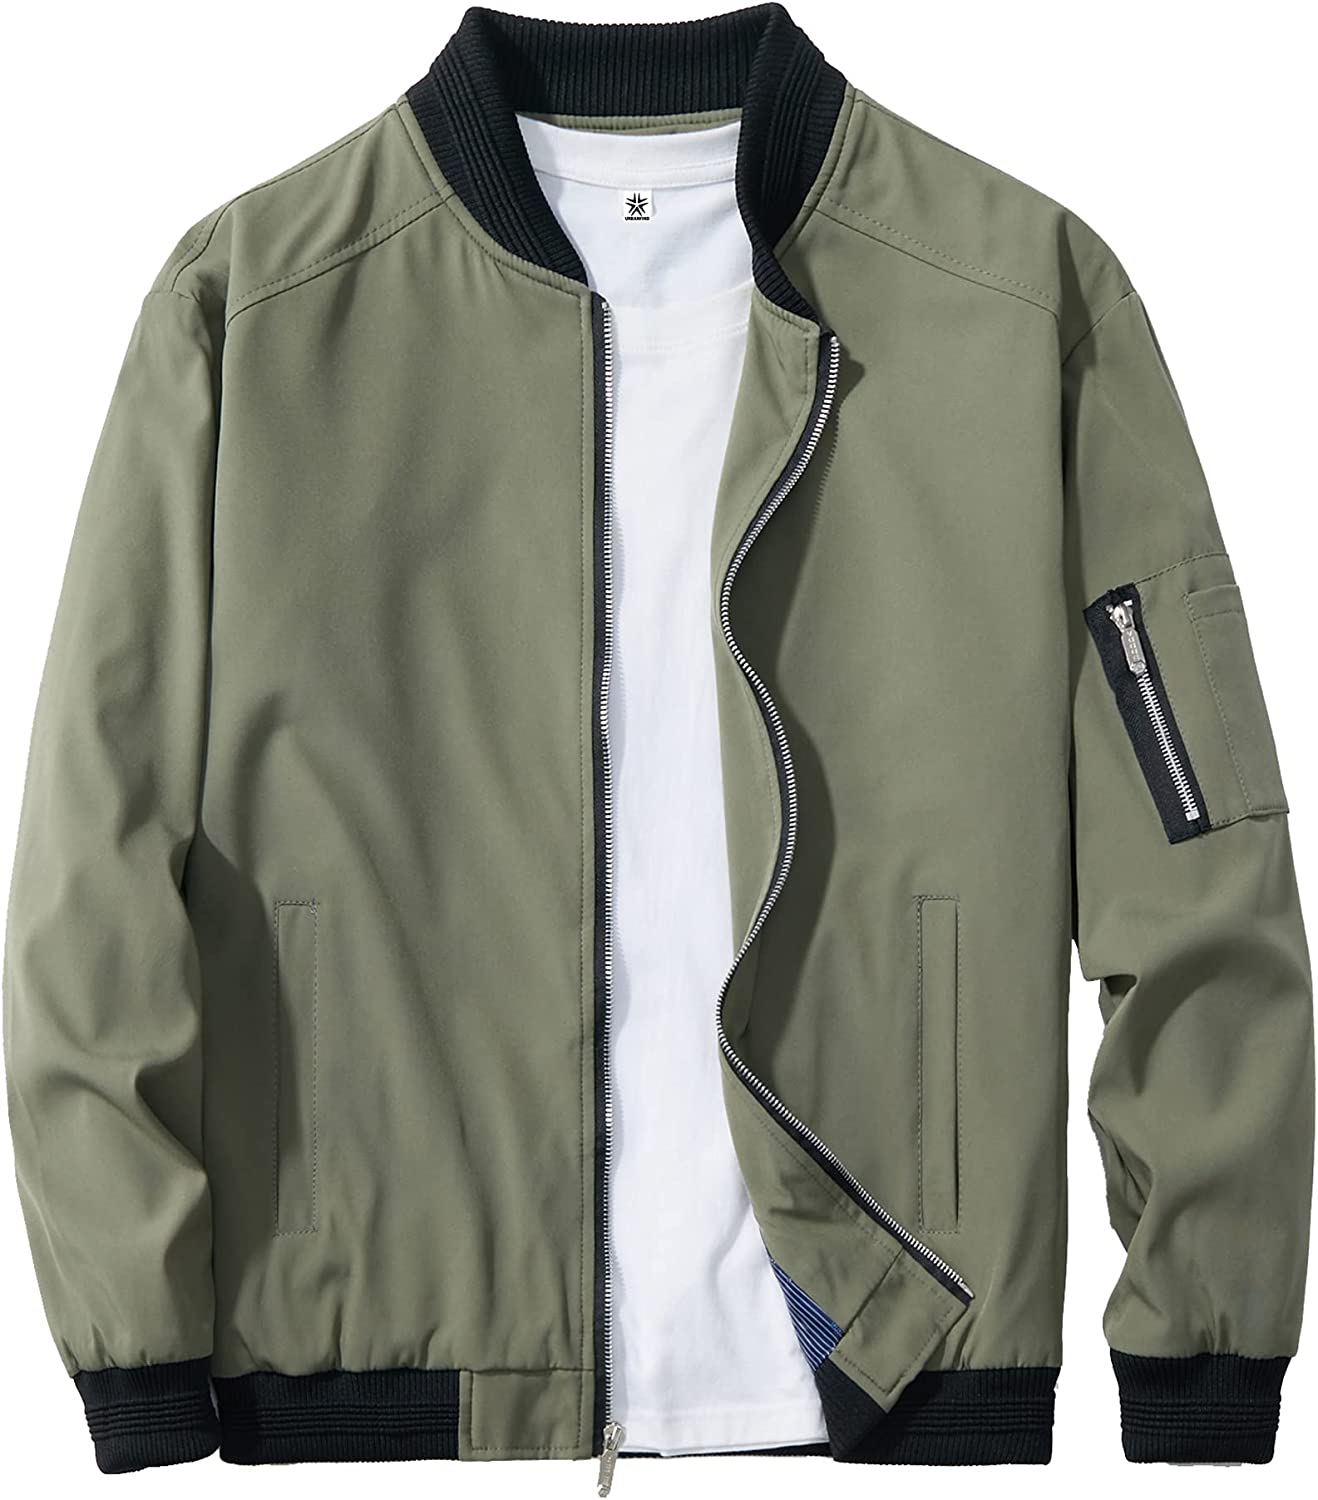 URBANFIND Men's Slim Fit Lightweight Sportswear Jacket Casual Bomber Jacket  at  Men’s Clothing store